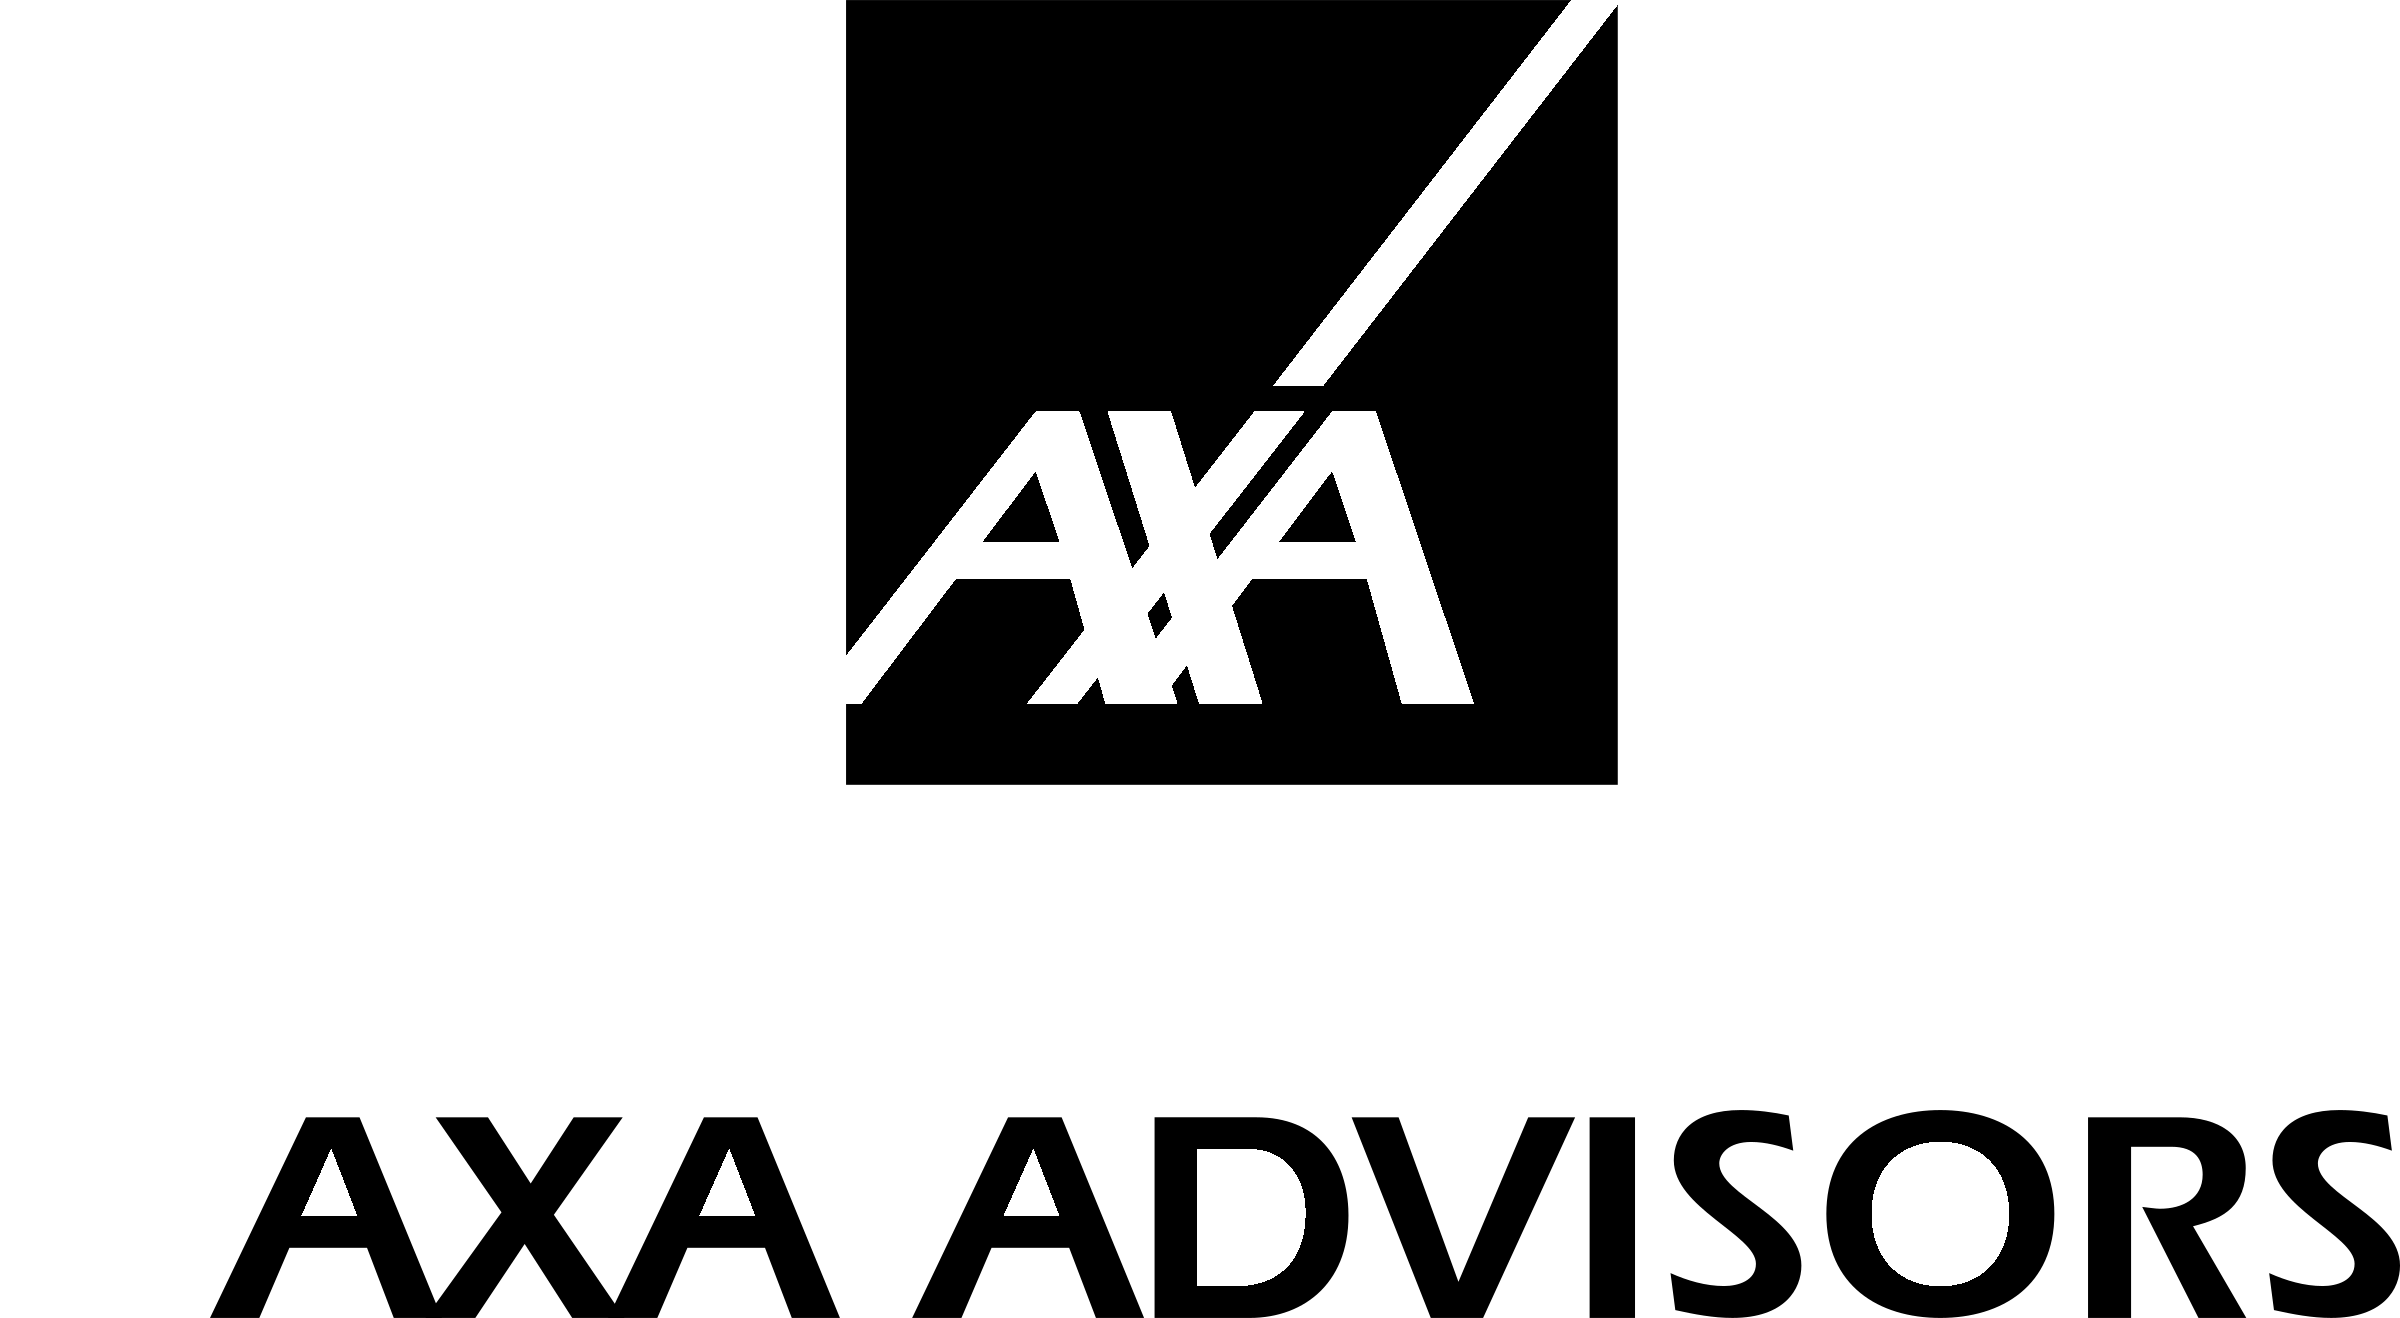 Axa logo black and white